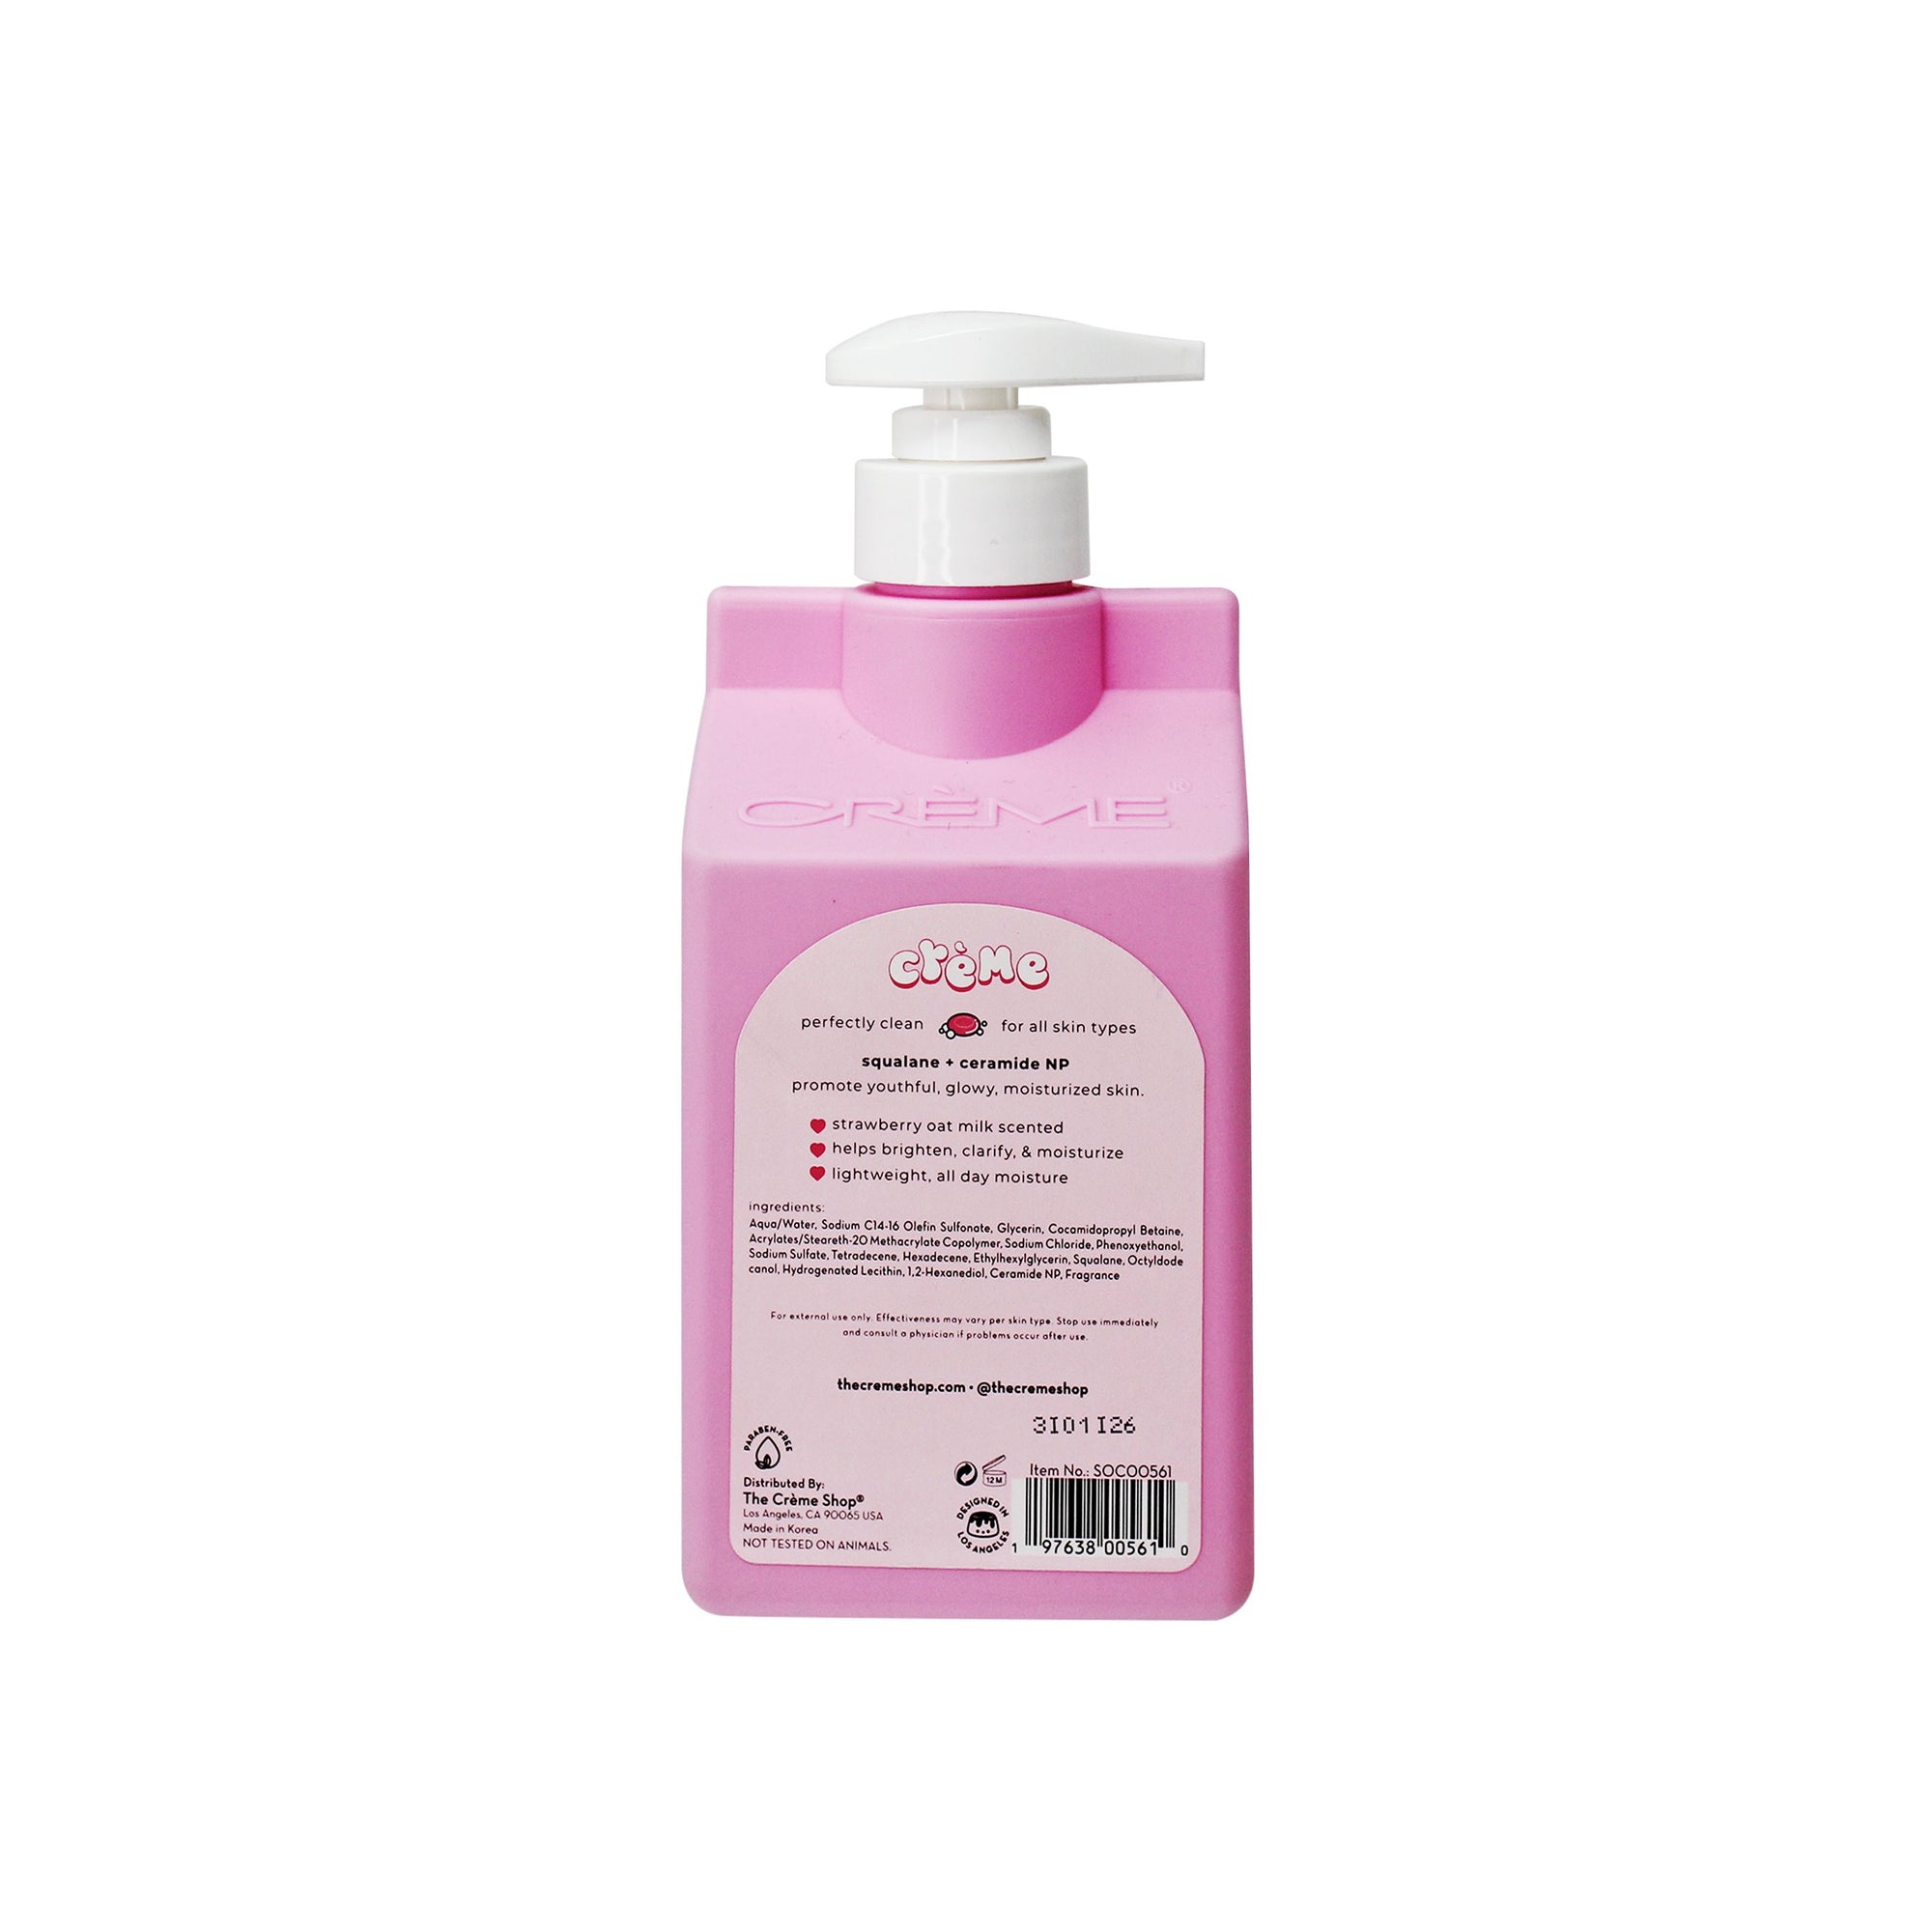 Advanced Cleanse Body Cleanser - Strawberry Oat Milk Body Scrub The Crème Shop 